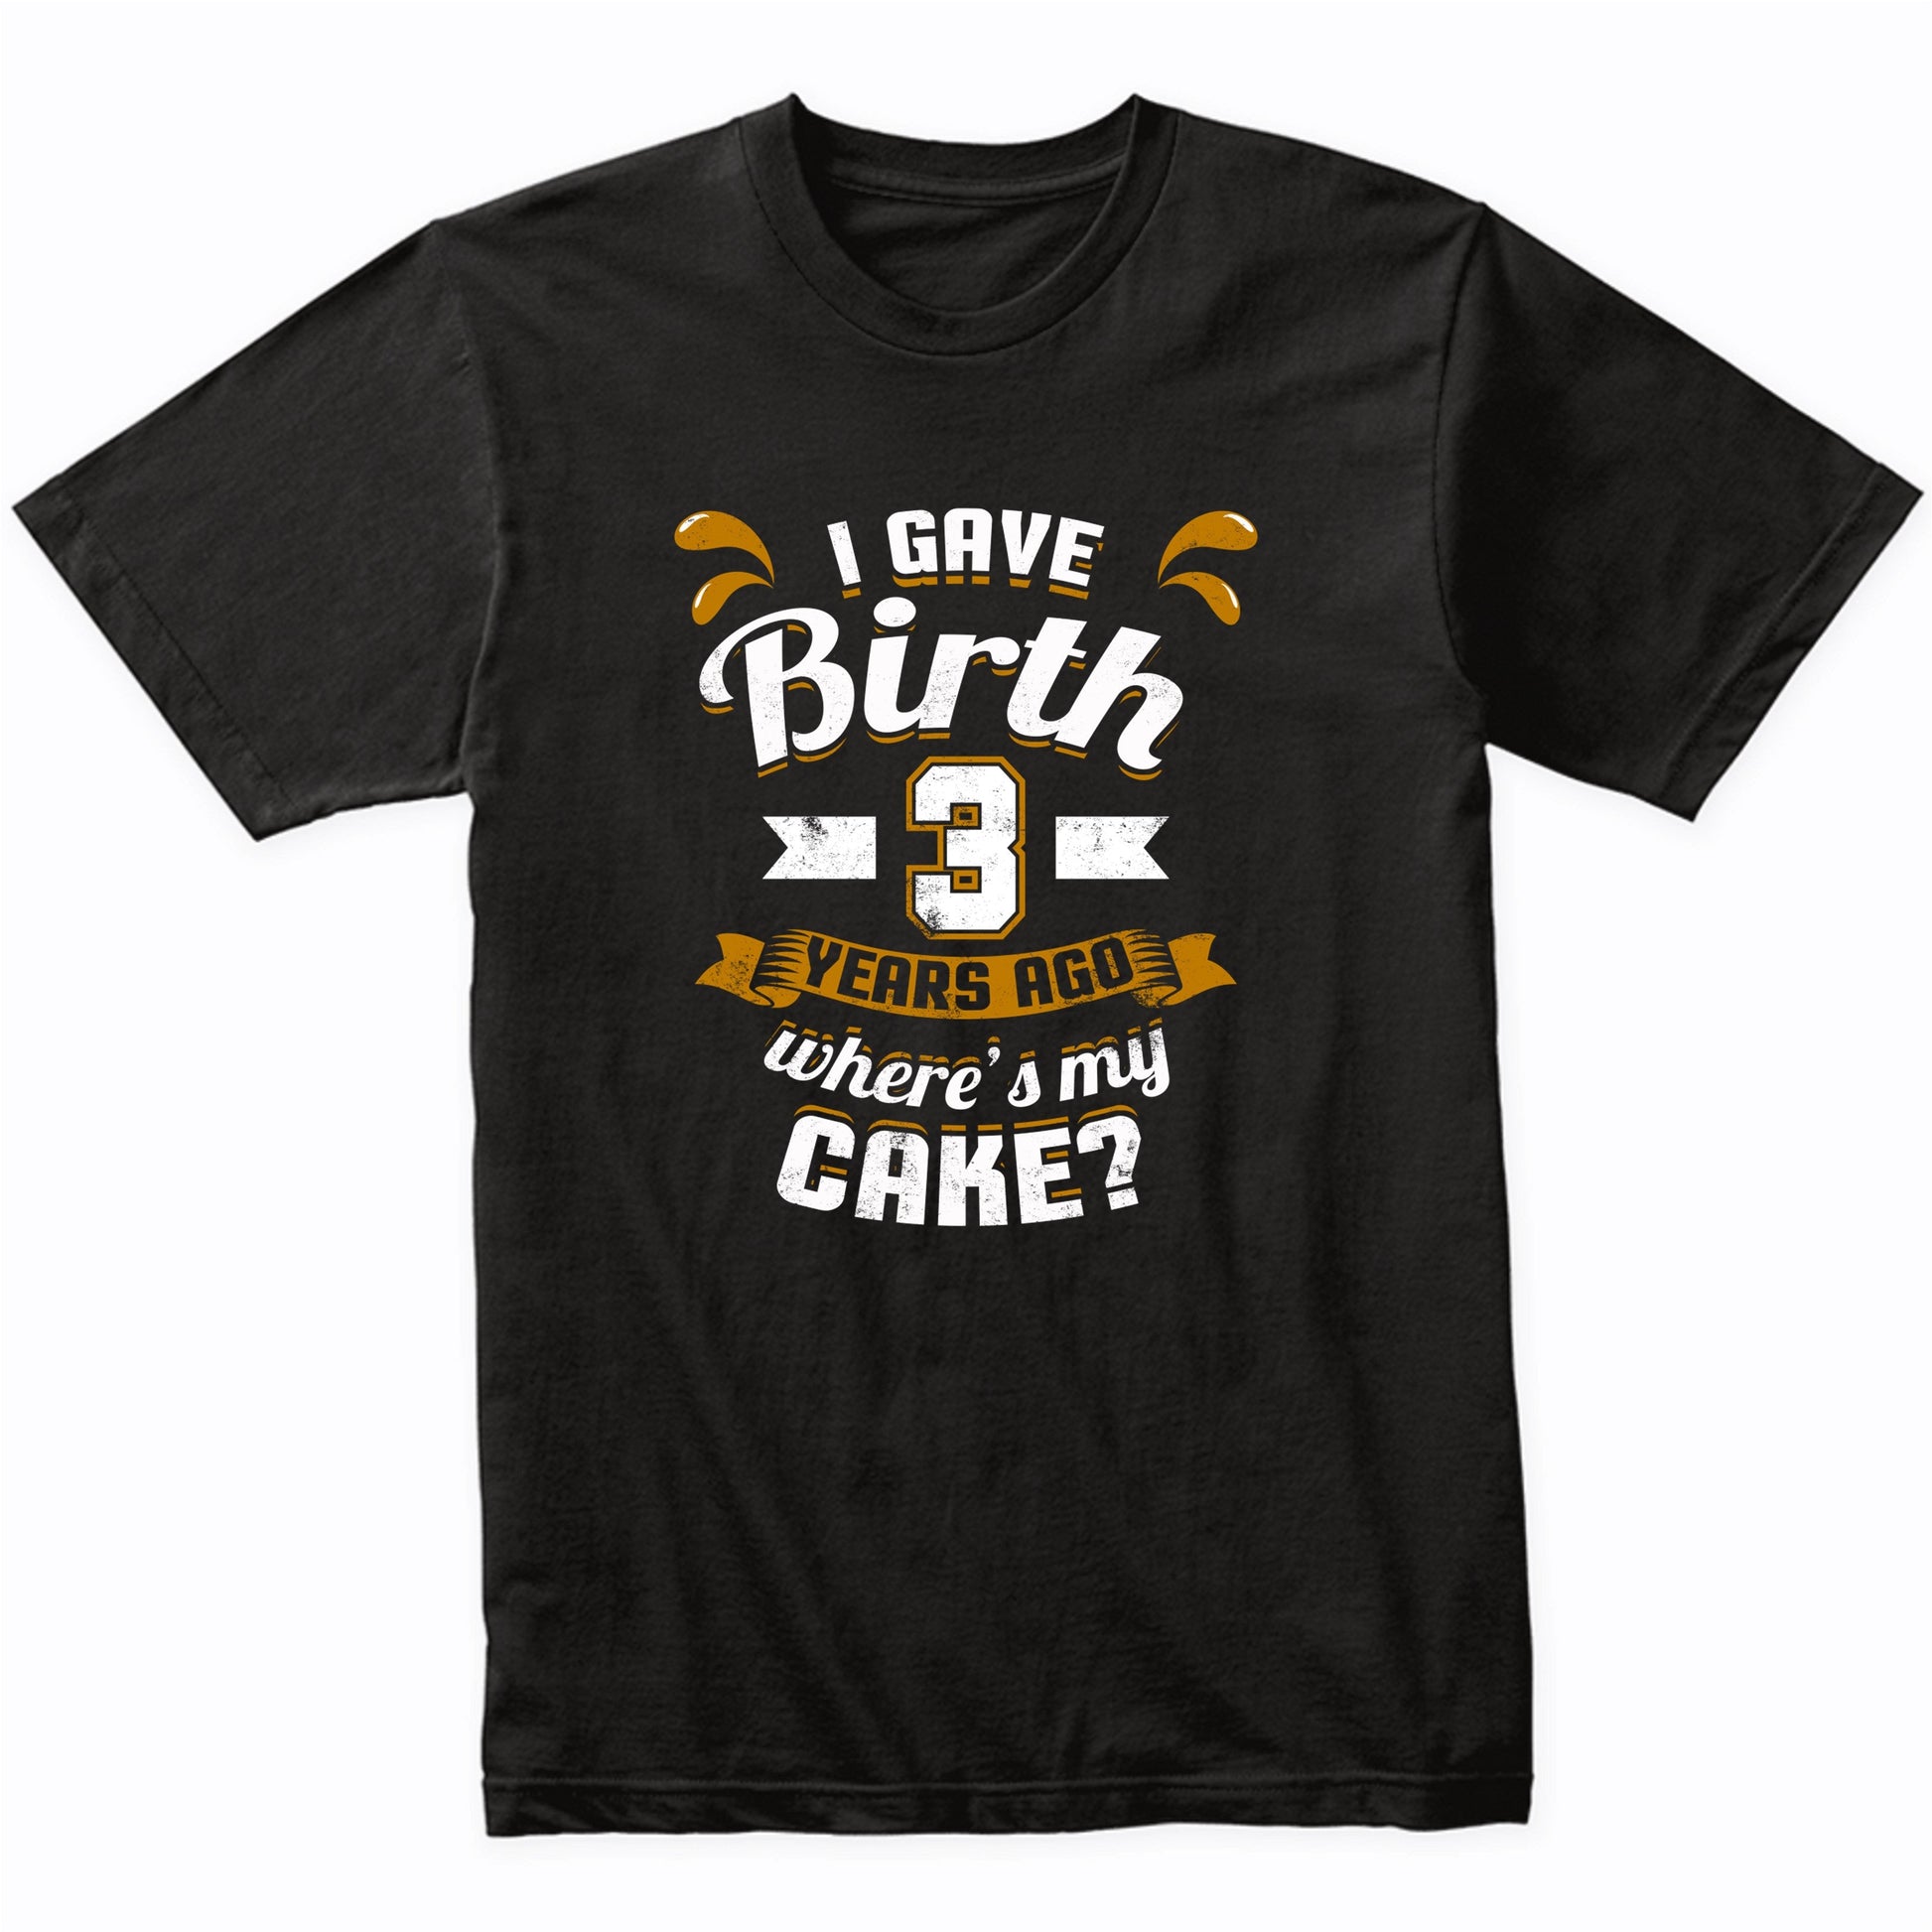 3rd Birthday Shirt For Mom I Gave Birth 3 Years Ago Where's My Cake?